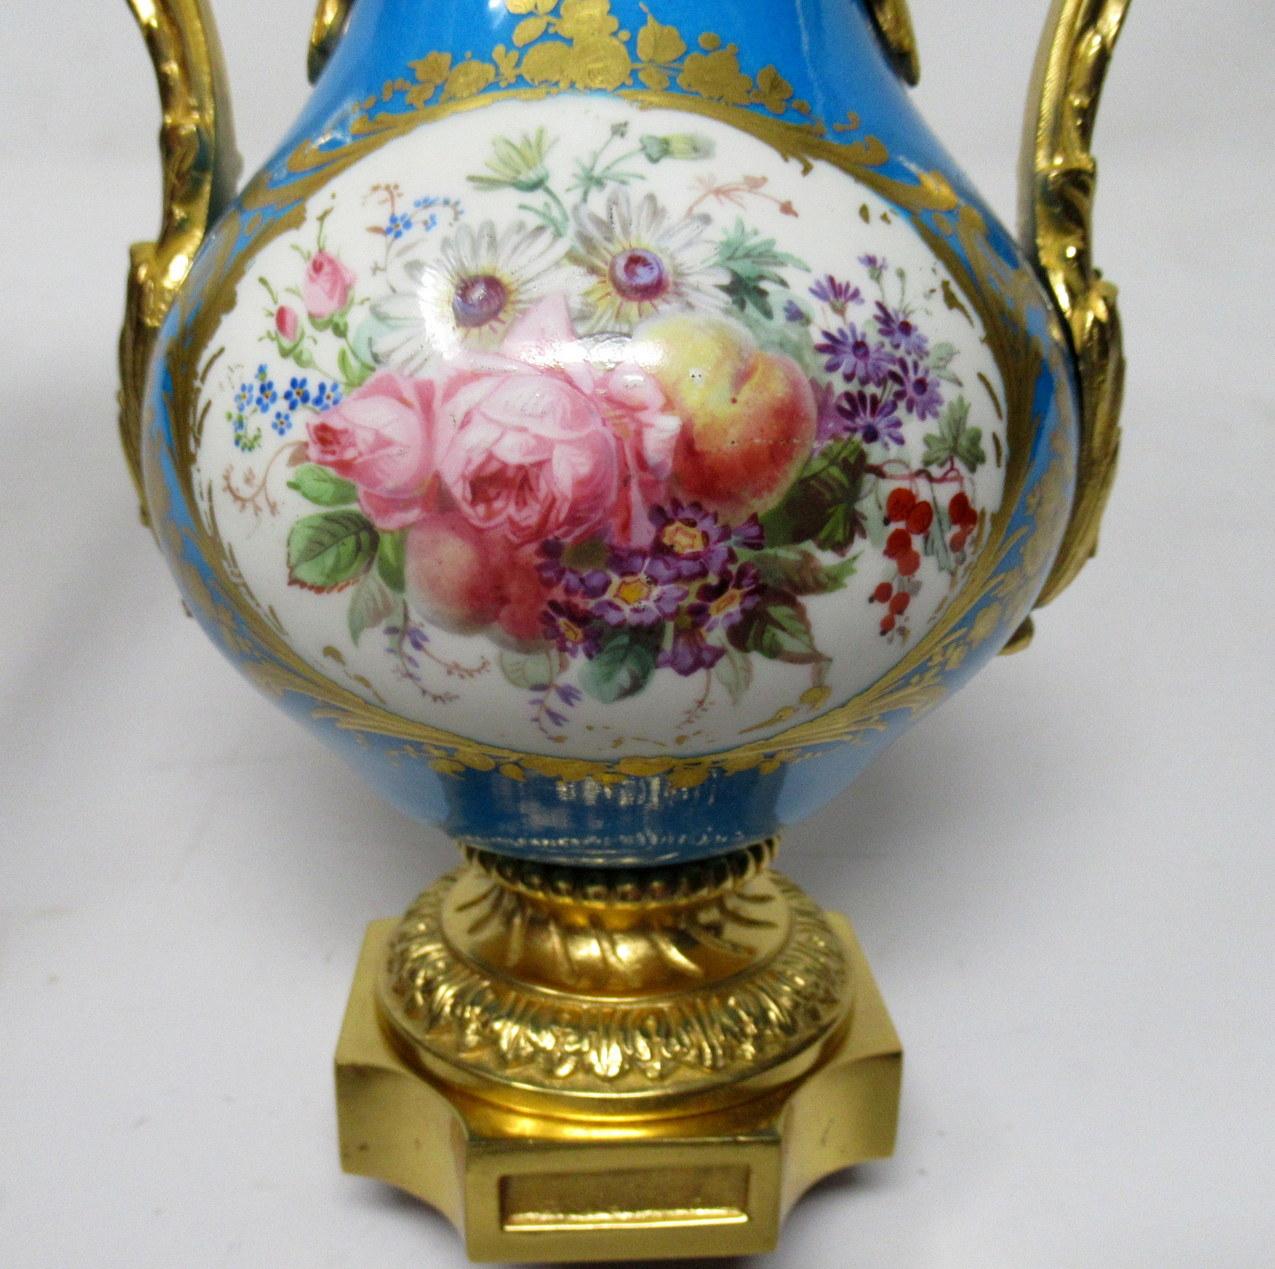 Sèvres Porcelain French Flowers Ormolu Bronze Celeste Blue Urn Vase 19th Century 1